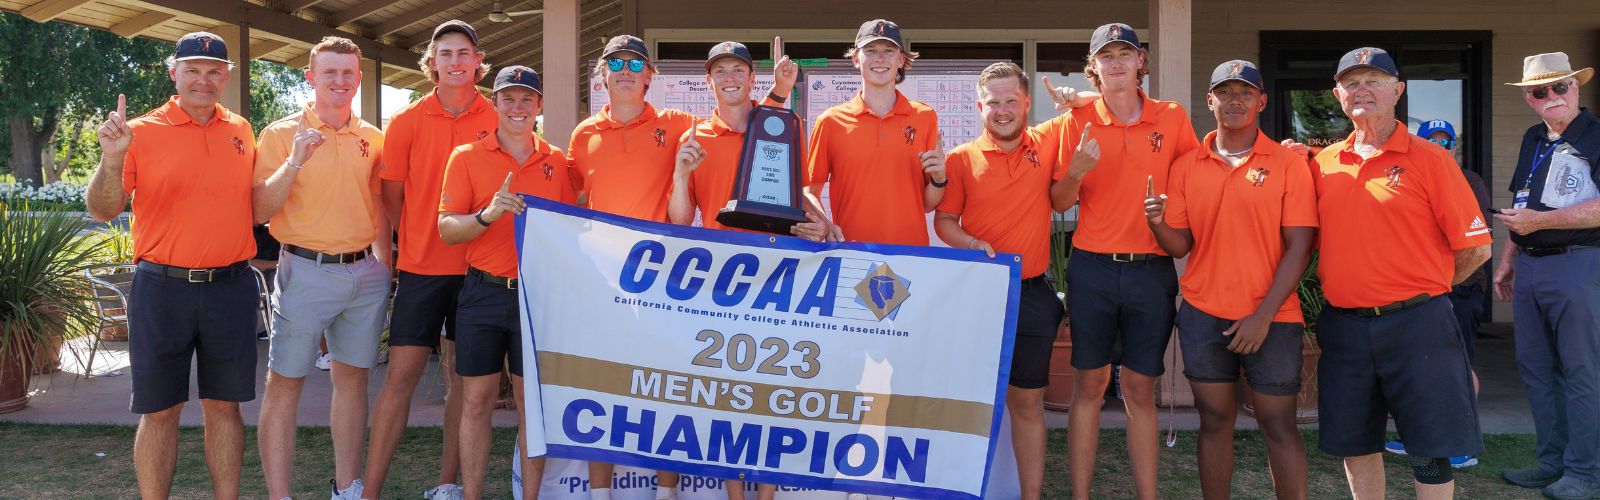 Men's Golf Team holding state championship banner